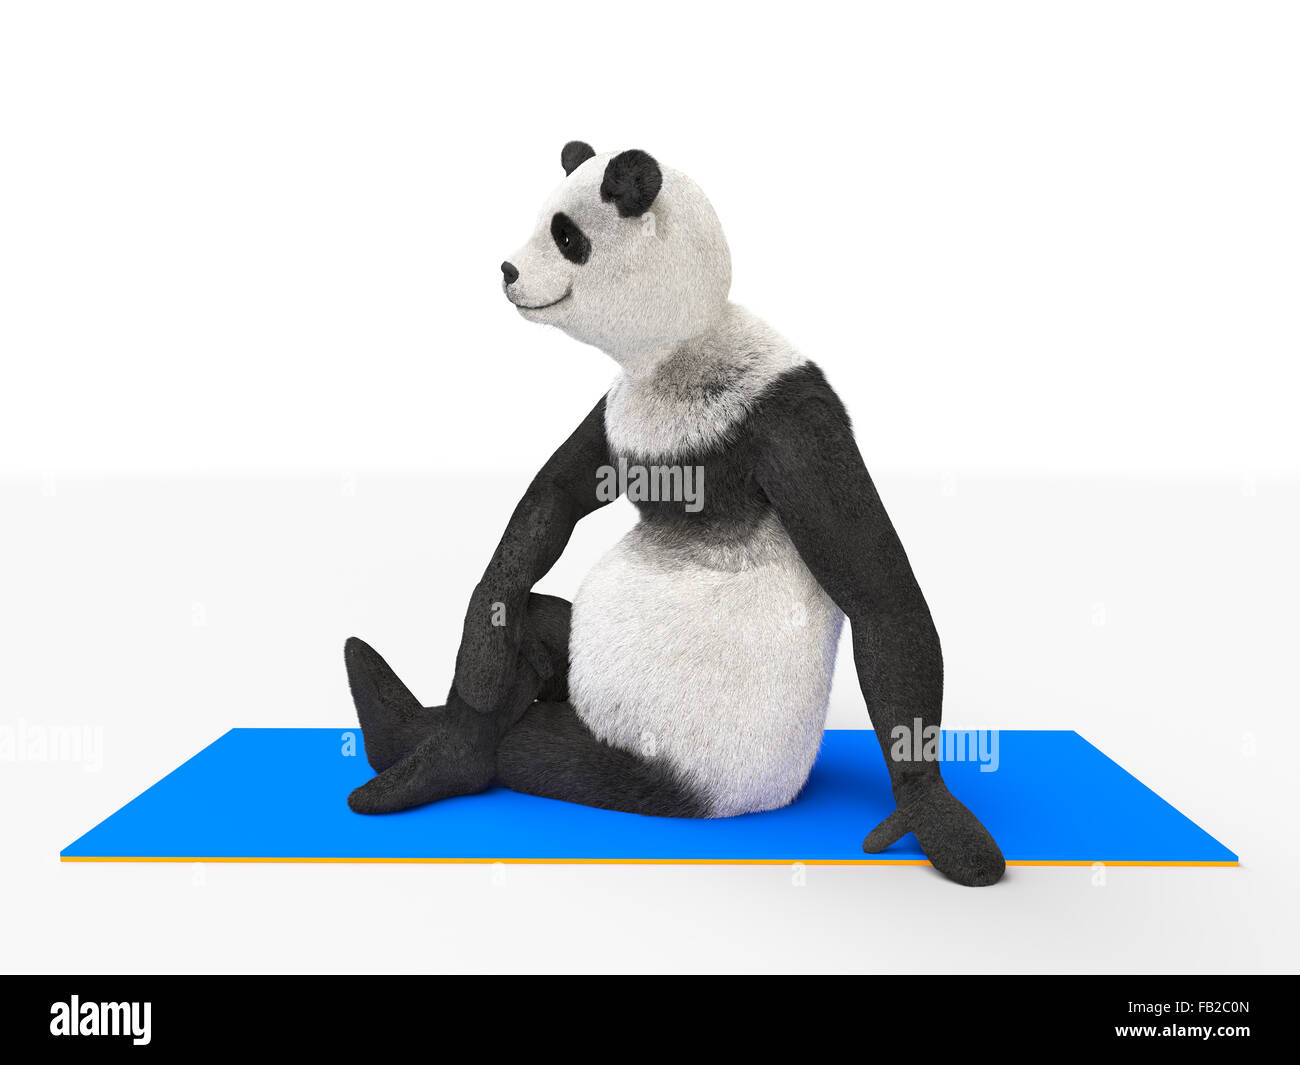 https://c8.alamy.com/comp/FB2C0N/animal-character-personage-panda-doing-yoga-FB2C0N.jpg